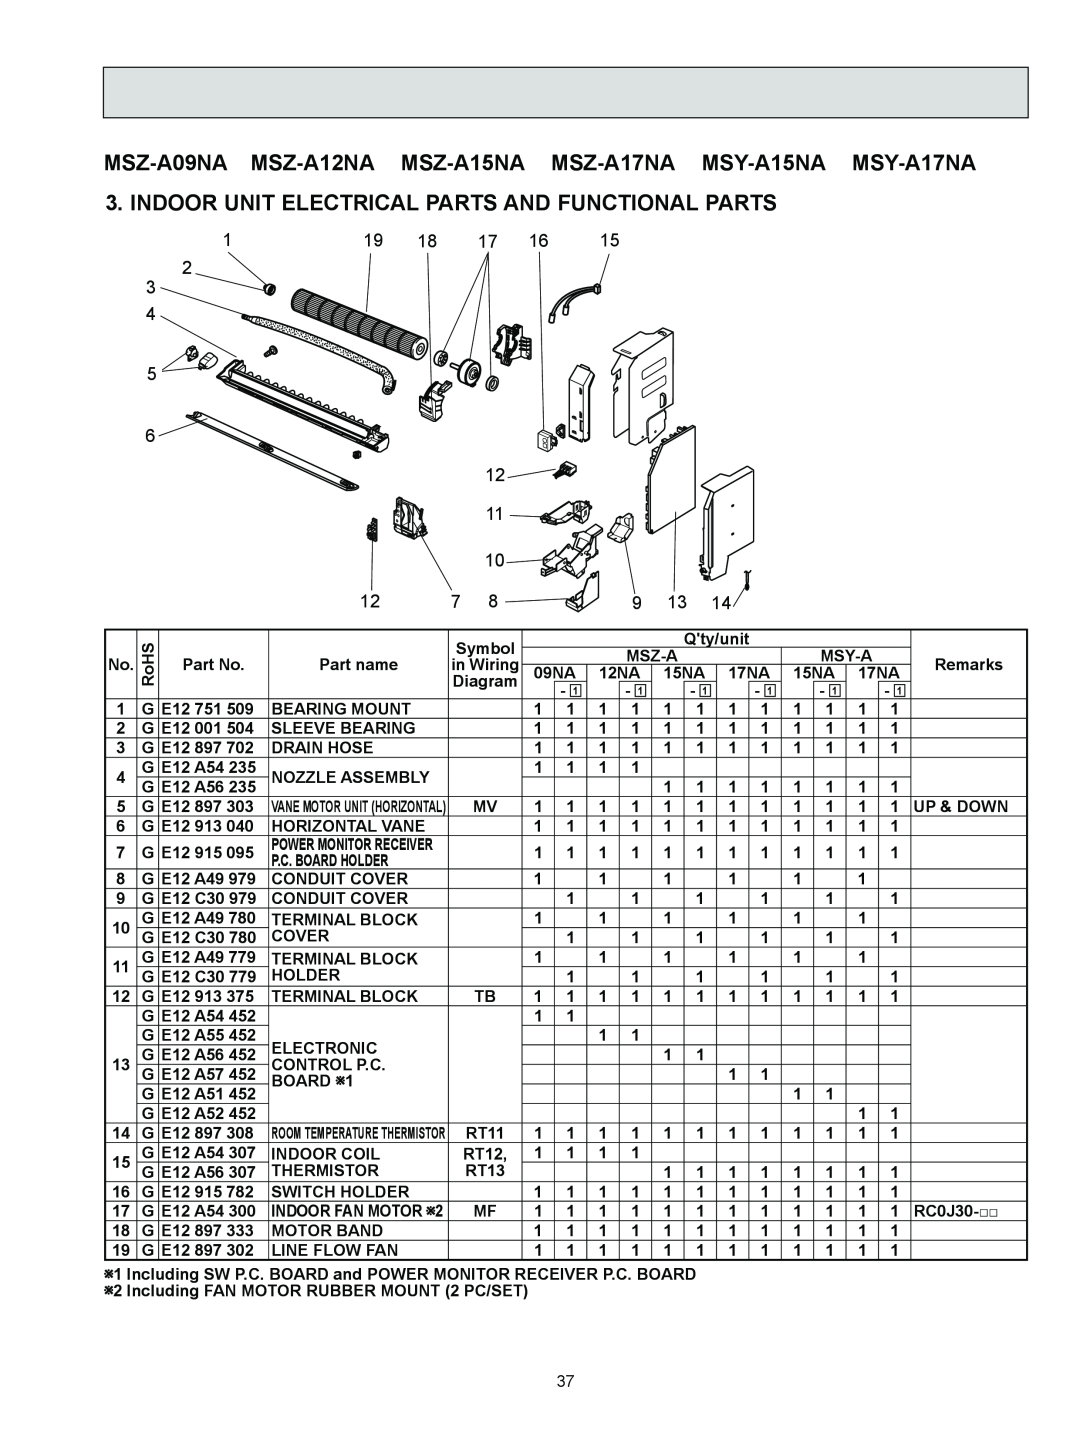 Logitech MSZ-A09NA, OB450 REVISED EDITION-B service manual No 1 2 3 4 5 6 7 8 9 10 11 12 13 14 15 16 17 